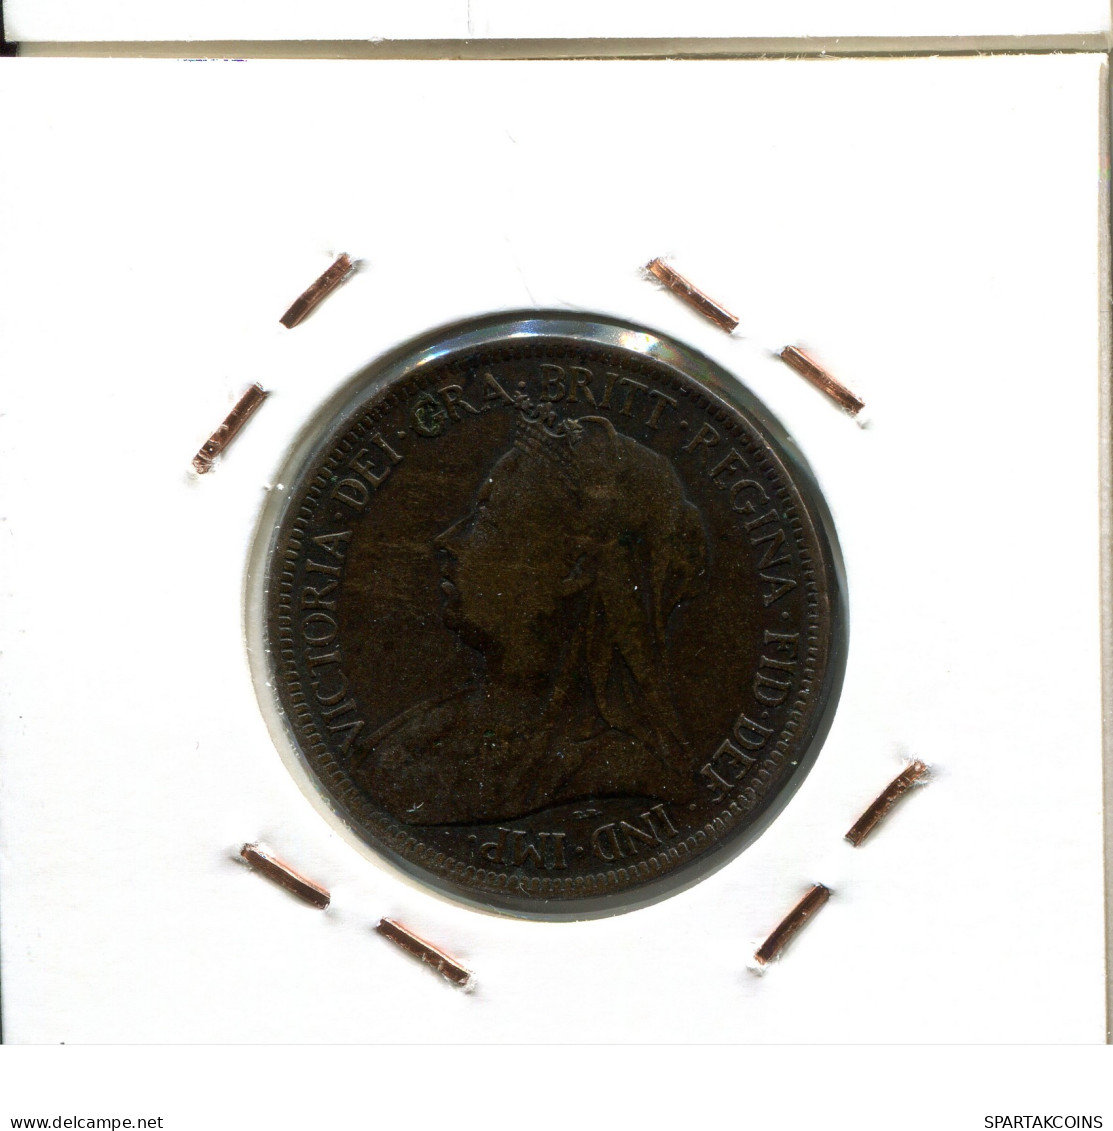 HALF PENNY 1896 UK GROßBRITANNIEN GREAT BRITAIN Münze #AW007.D - C. 1/2 Penny